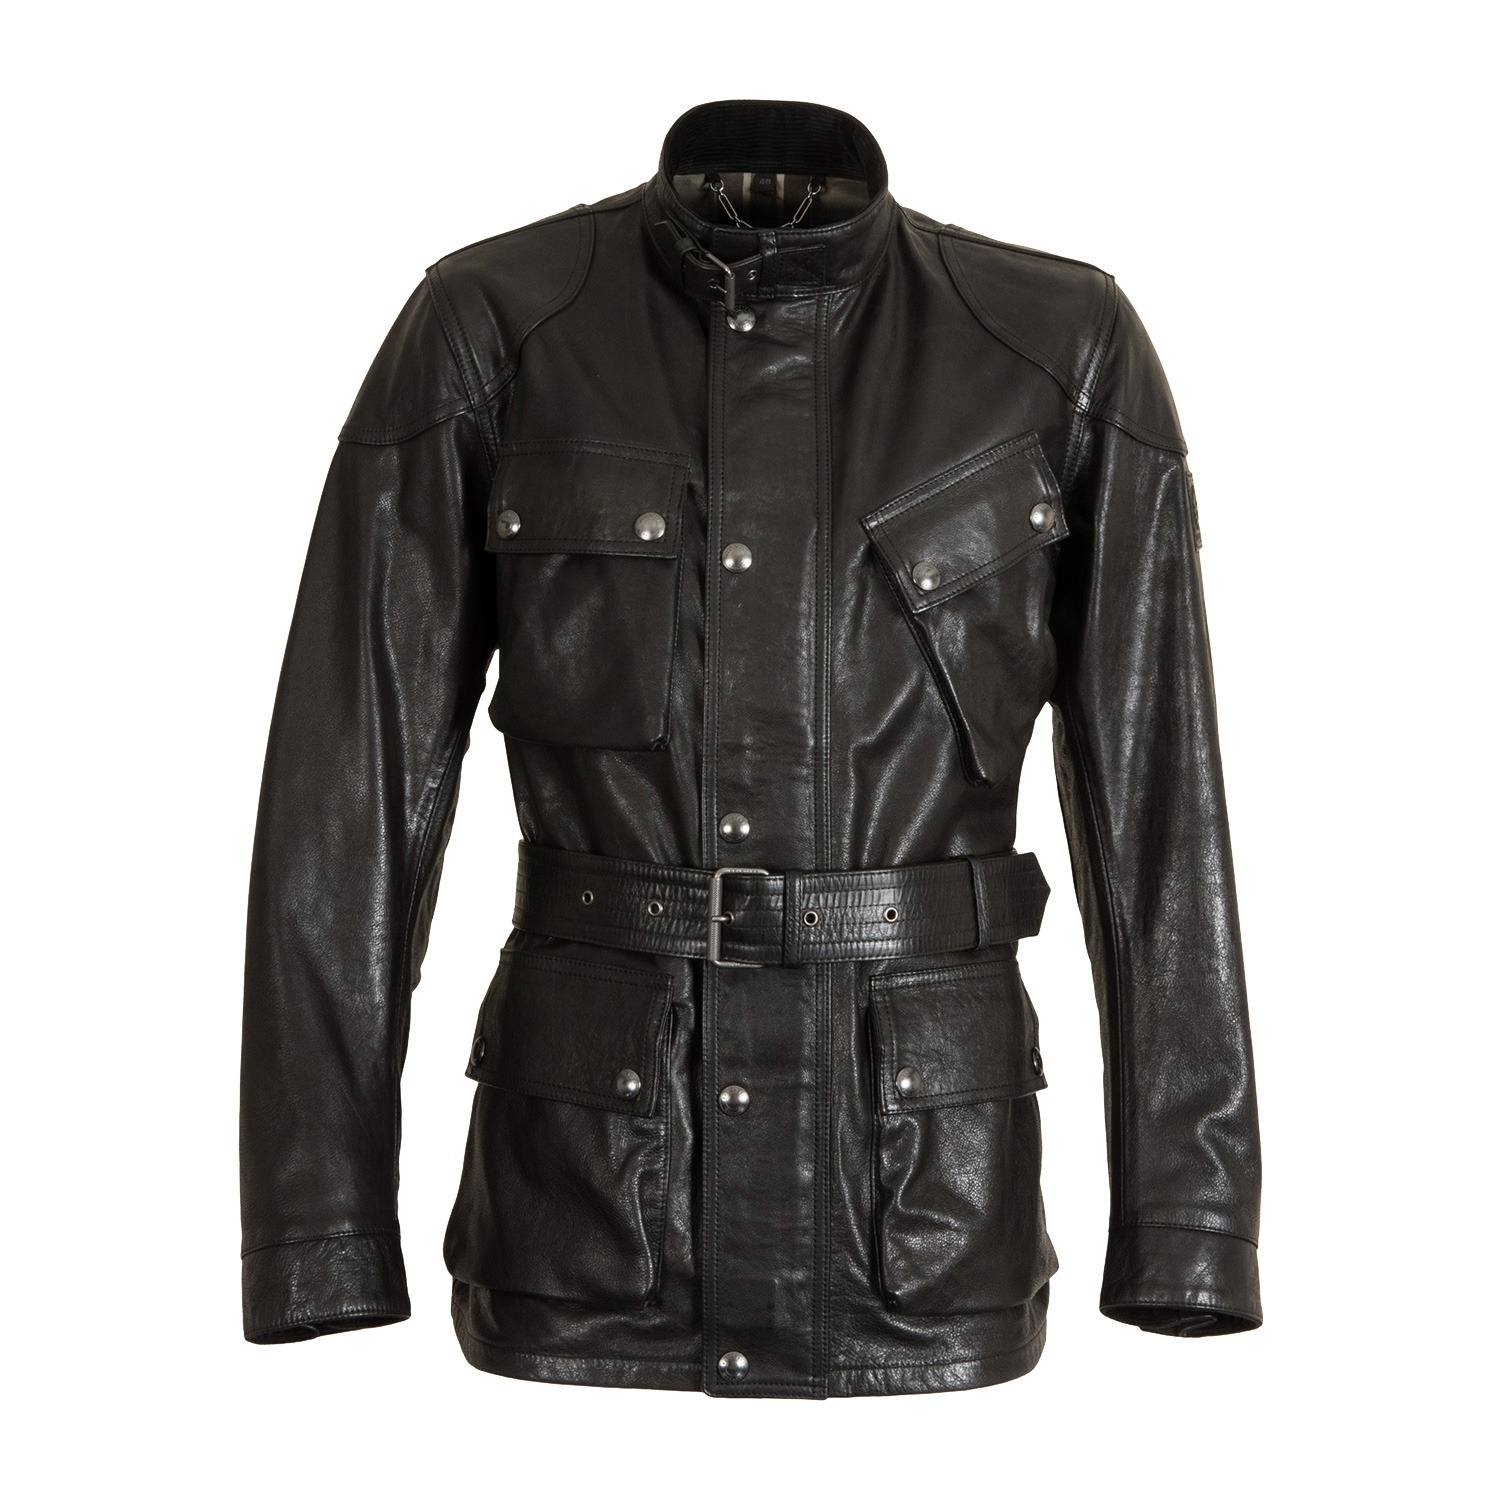 'Panther' Leather Jacket Black